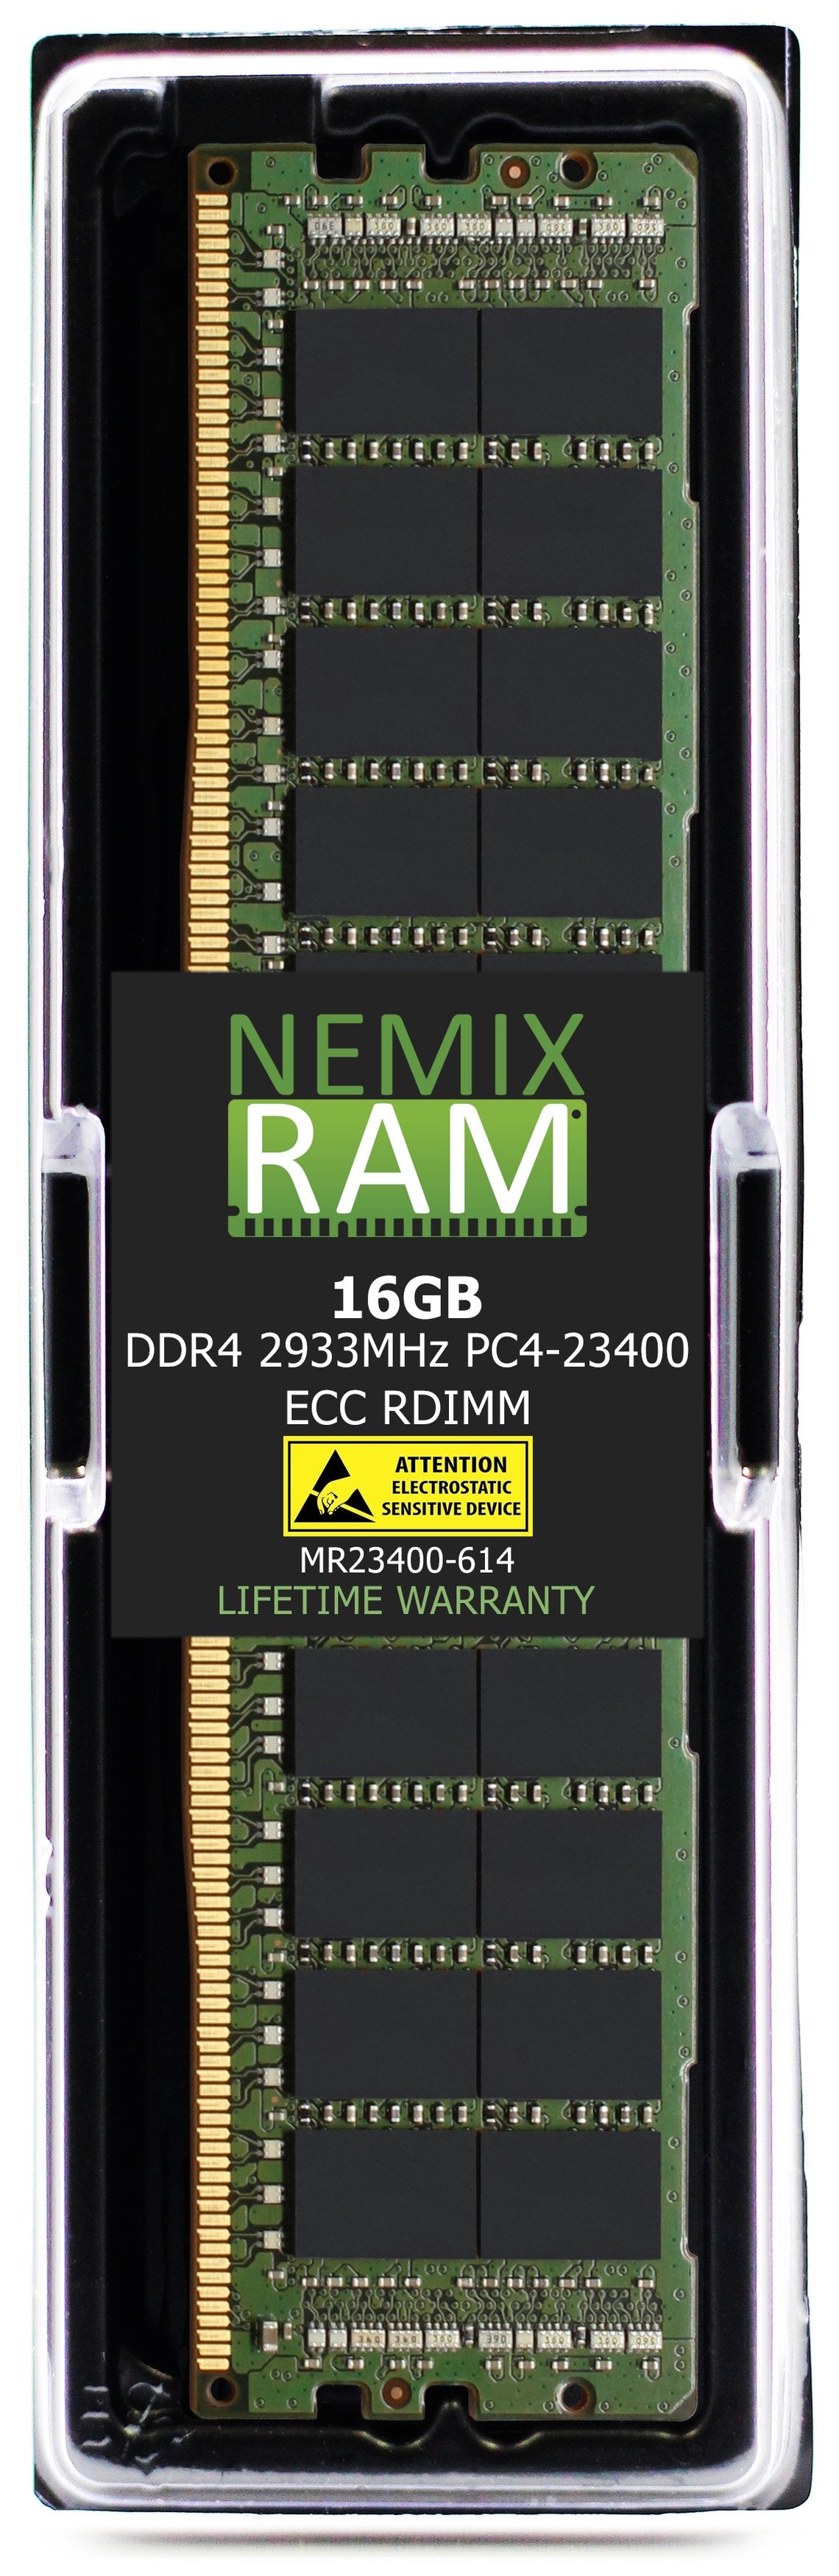 16GB DDR4 2933MHZ PC4-23400 RDIMM Compatible with Supermicro MEM-DR416L-SL02-ER29